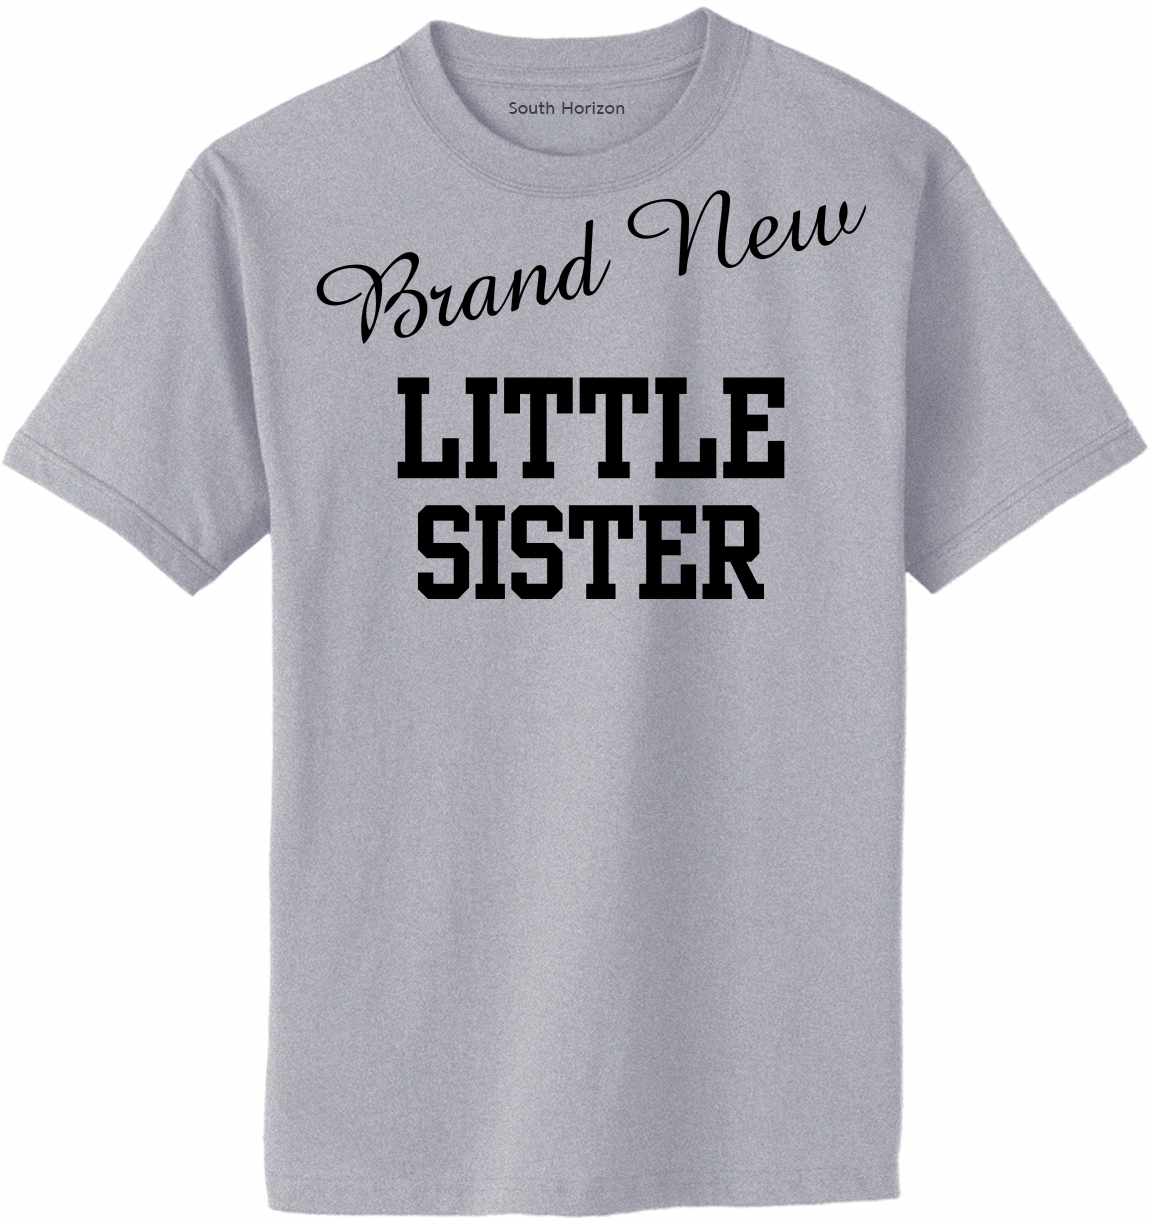 Brand New Little Sister Adult T-Shirt